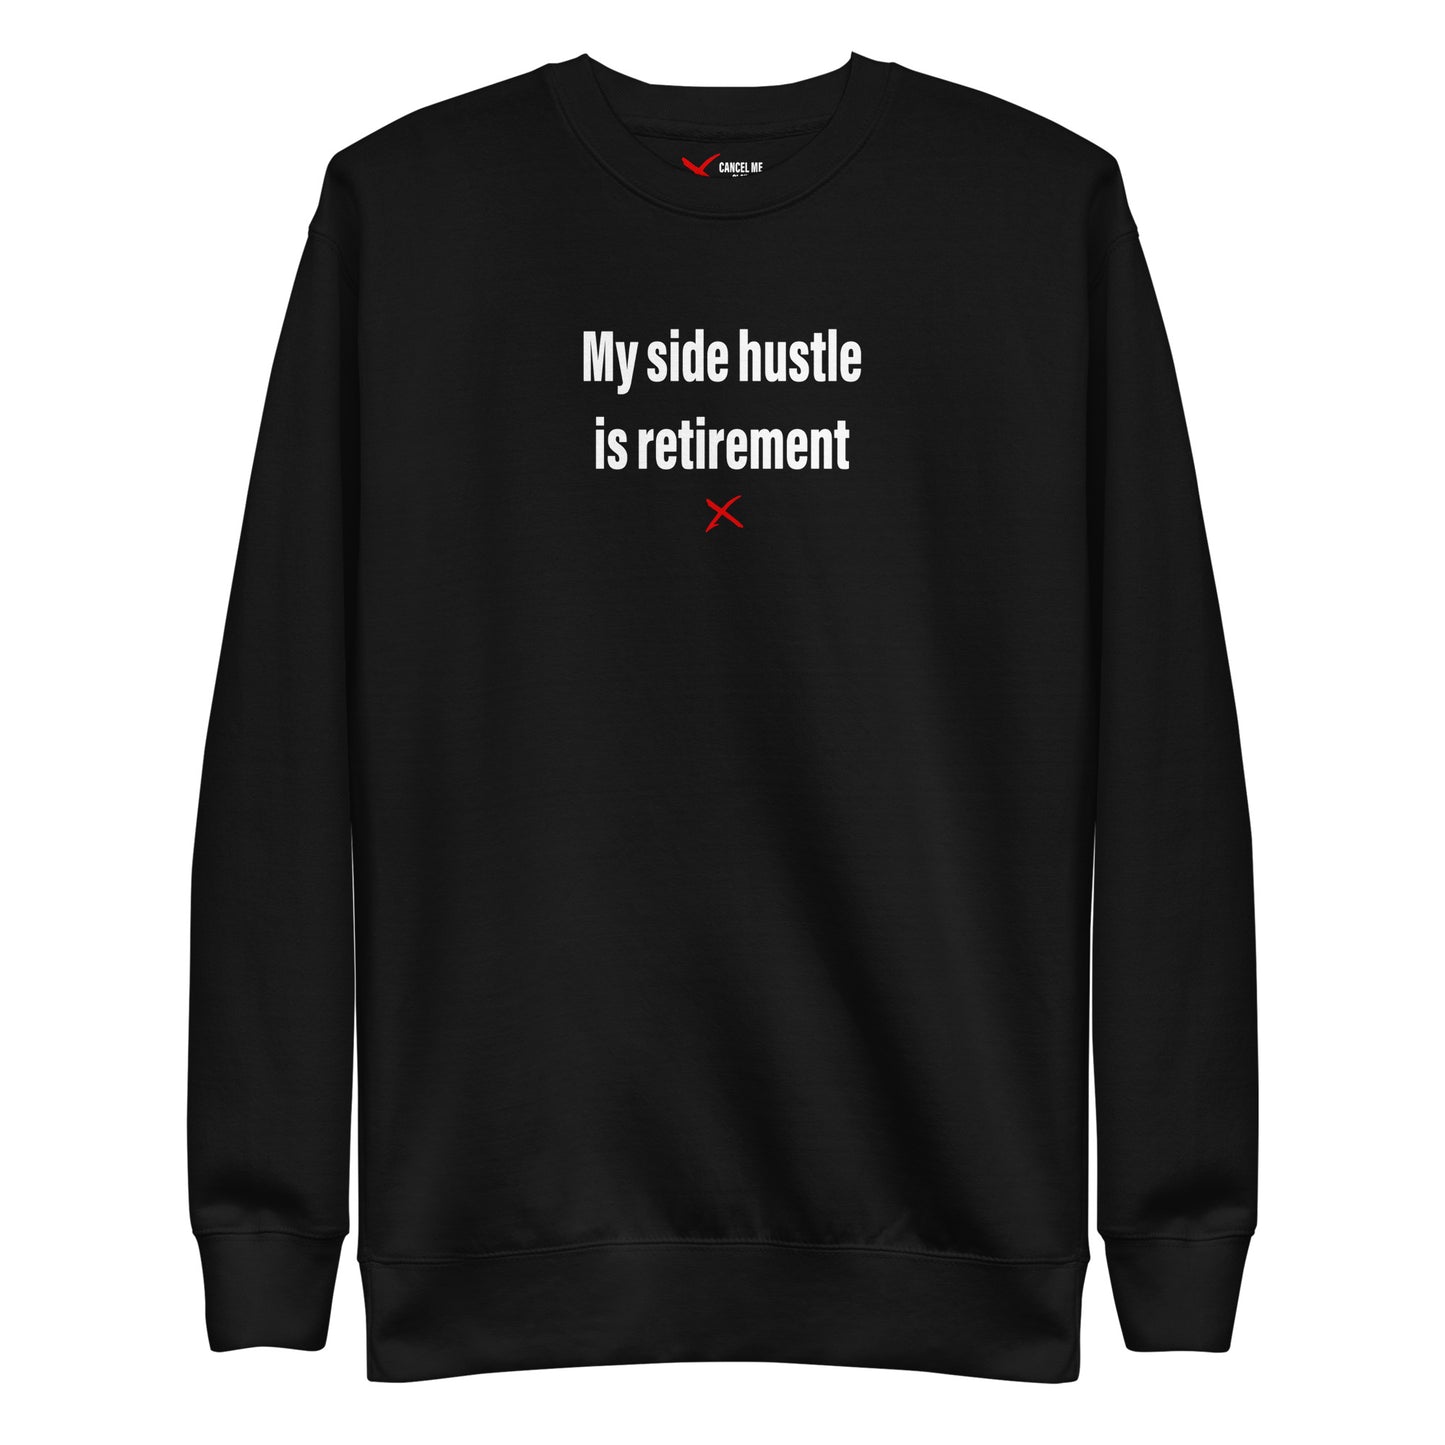 My side hustle is retirement - Sweatshirt